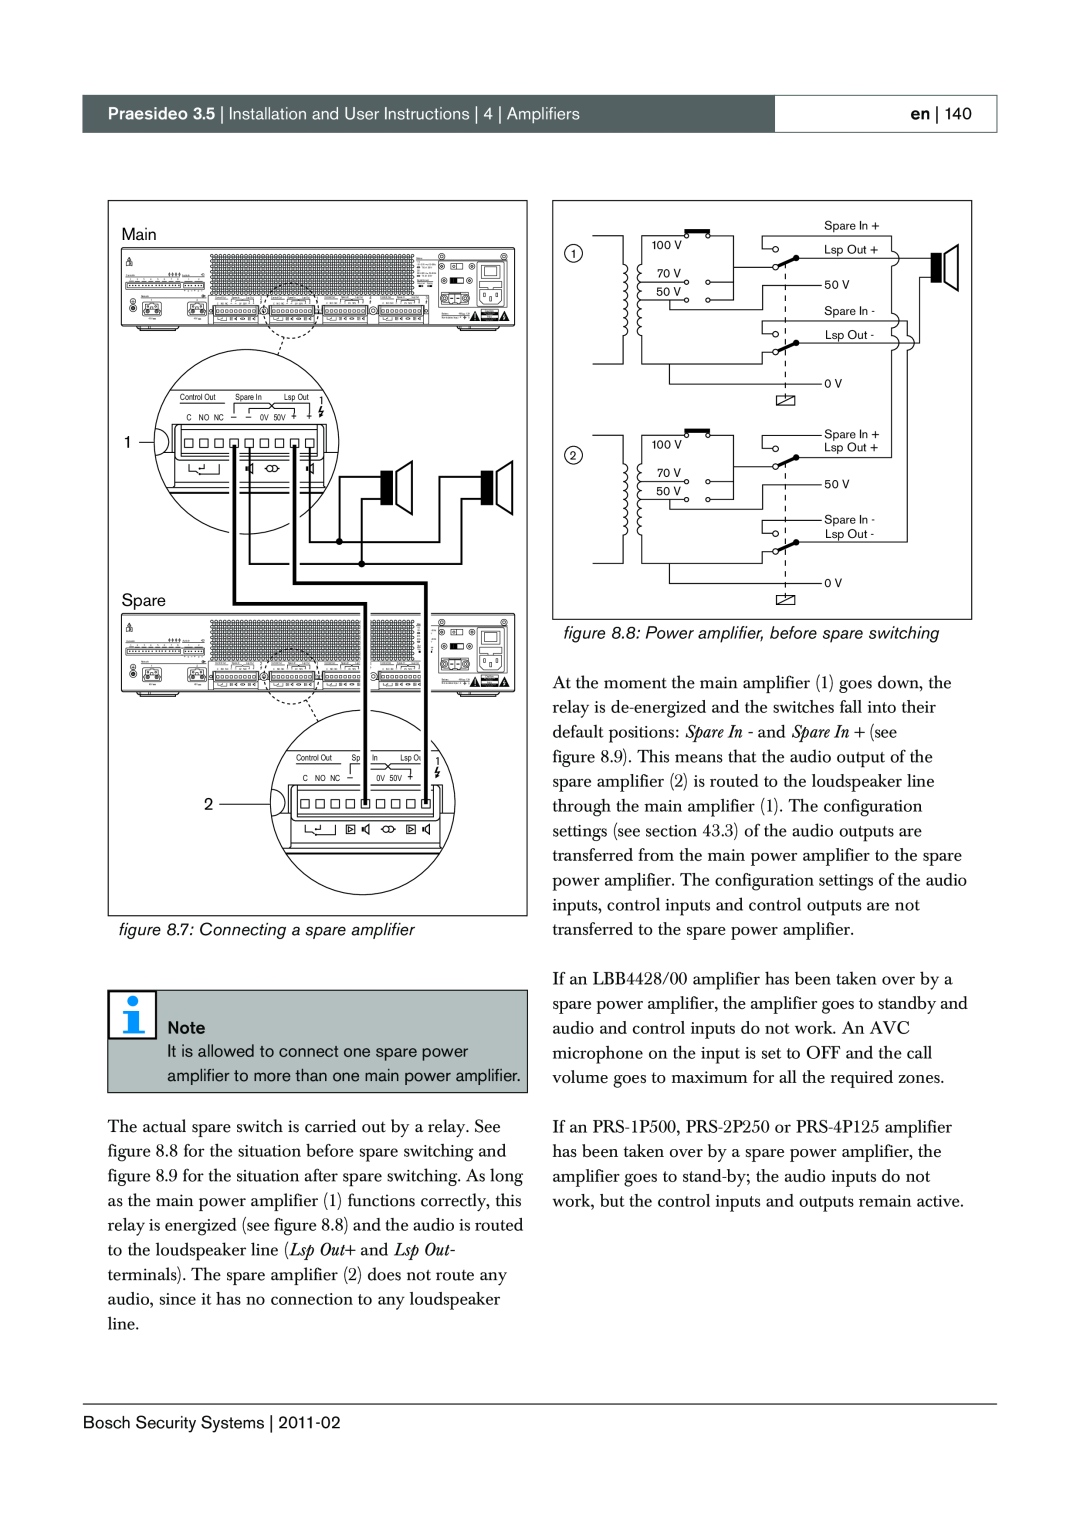 Bosch Appliances 3.5 manual 7: Connecting a spare amplifier, en, Main, Bosch Security Systems 